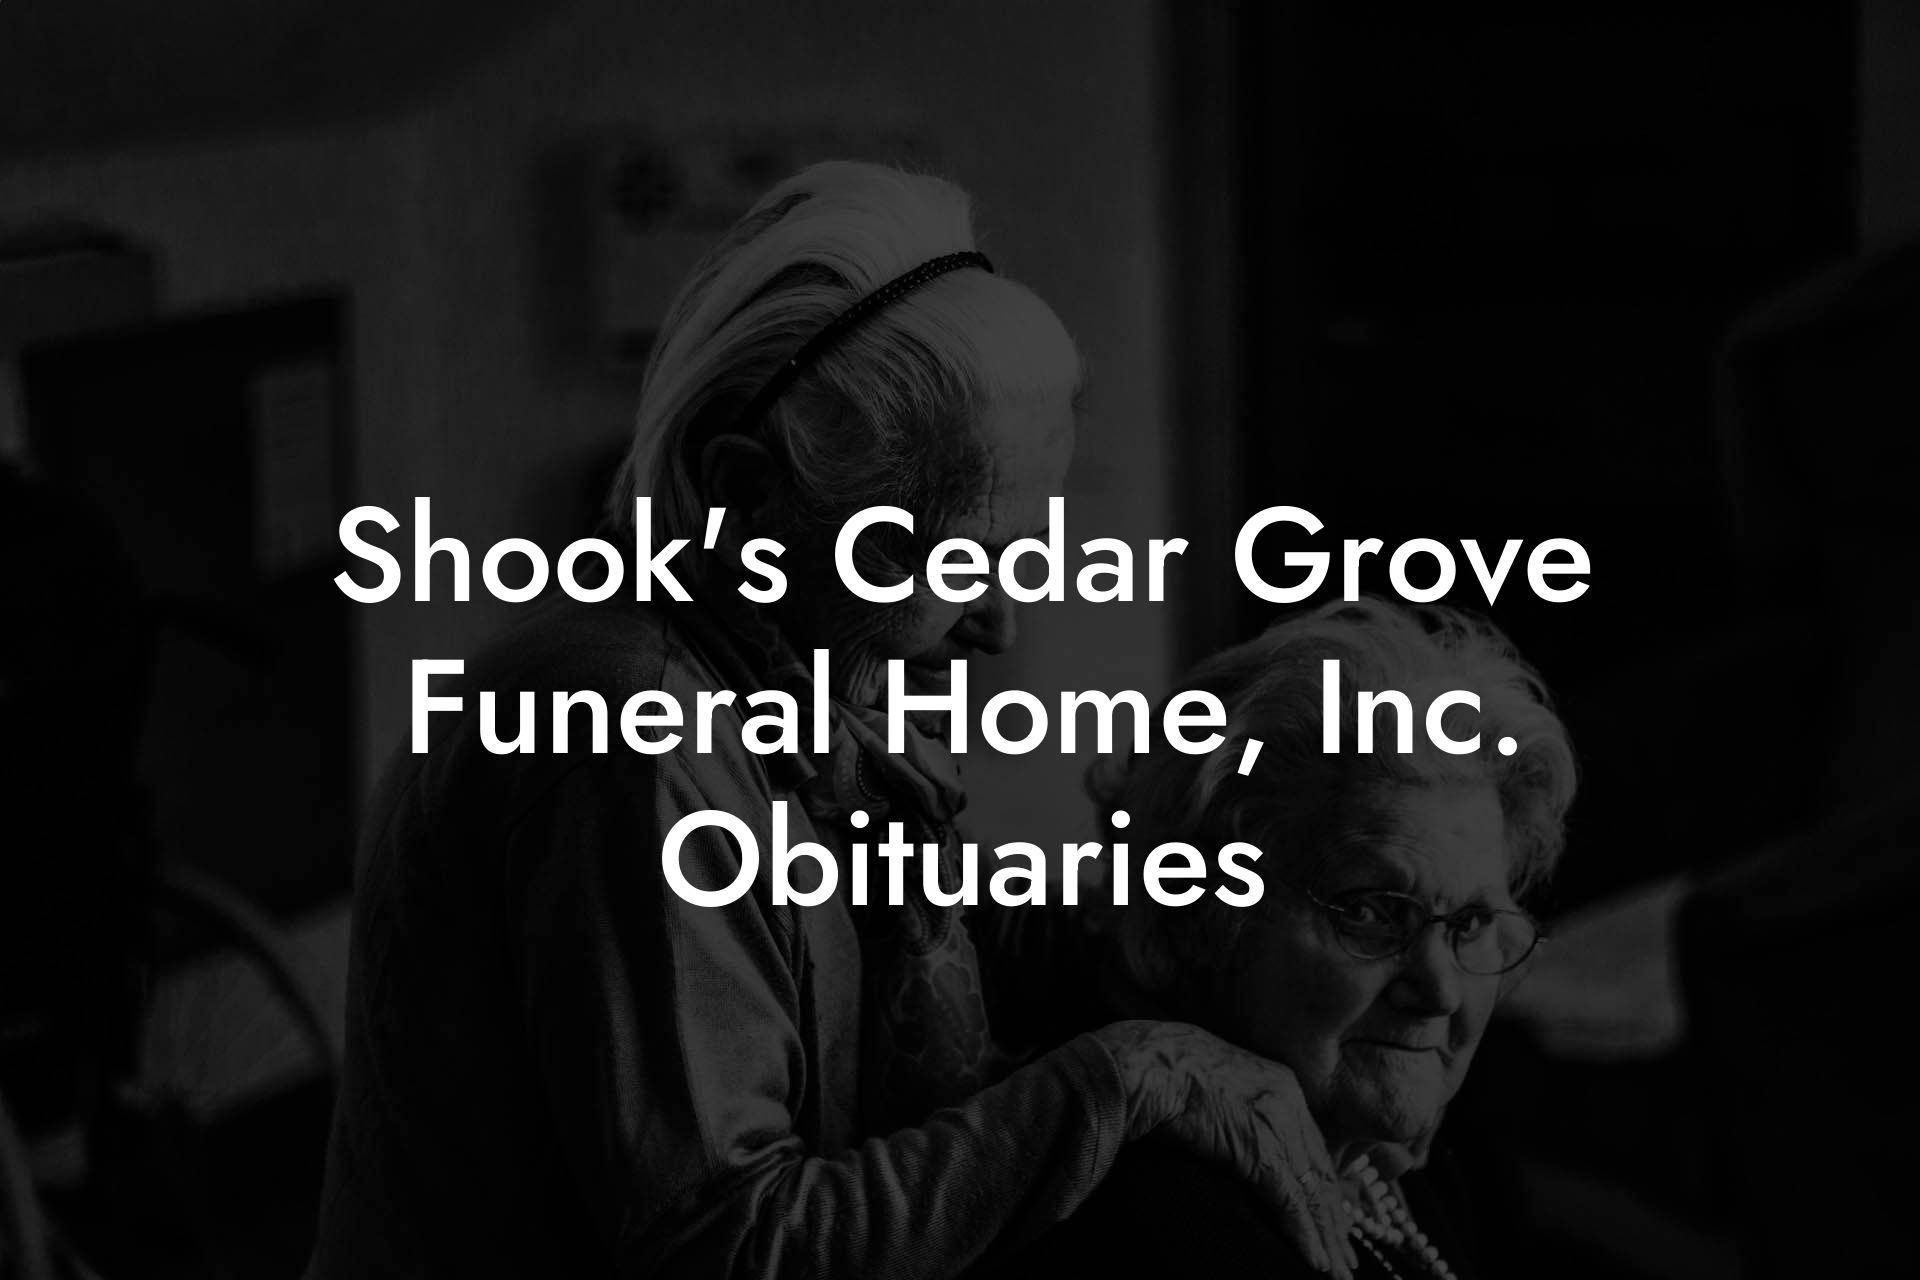 Shook's Cedar Grove Funeral Home, Inc. Obituaries